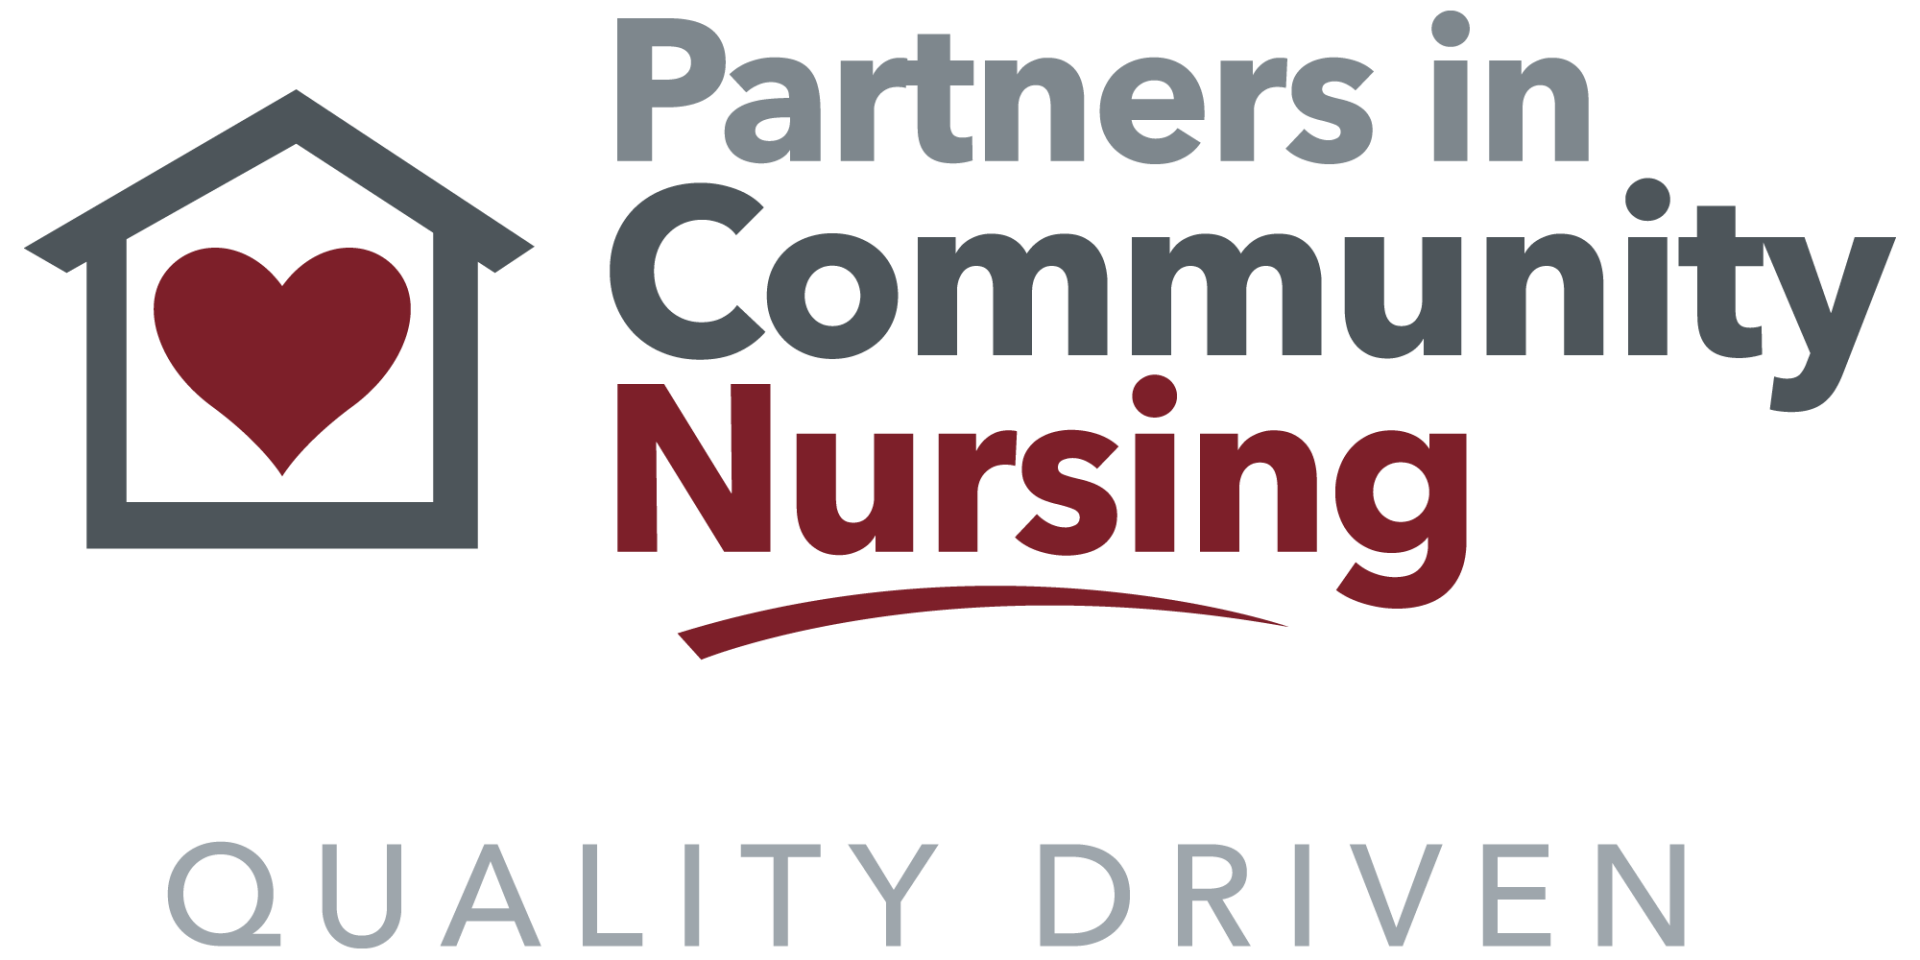 Partners in Community Nursing logo